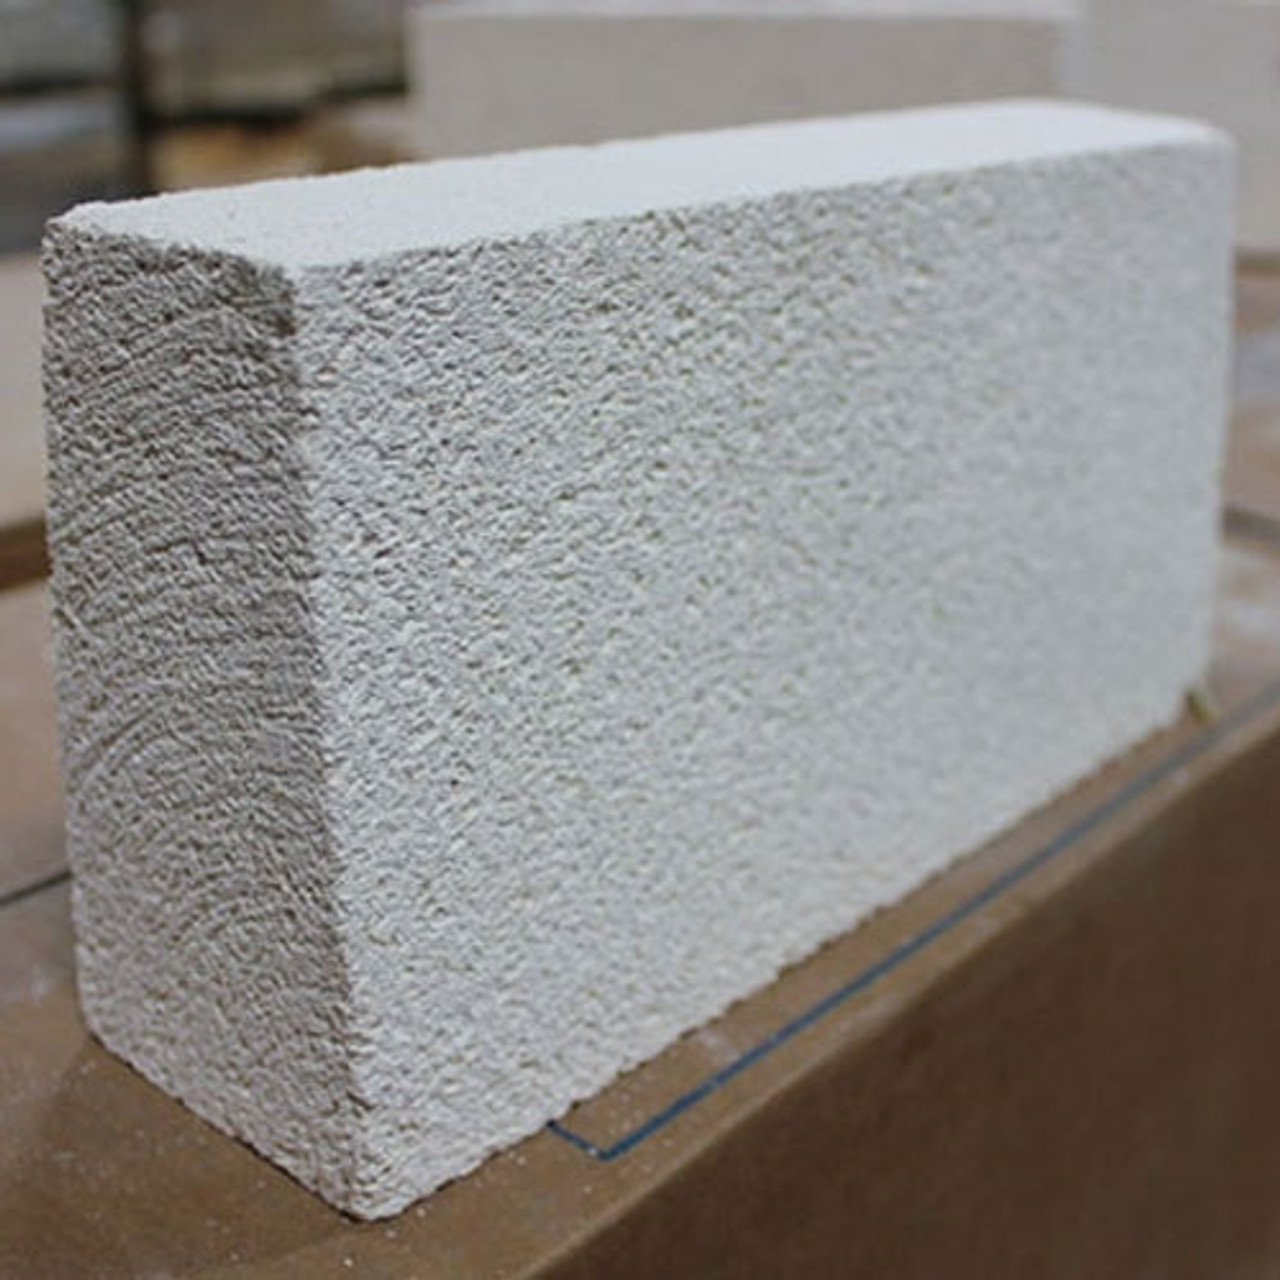 Soft Insulating Firebrick - K26 9 straight (individual) - Brackers Good  Earth Clays